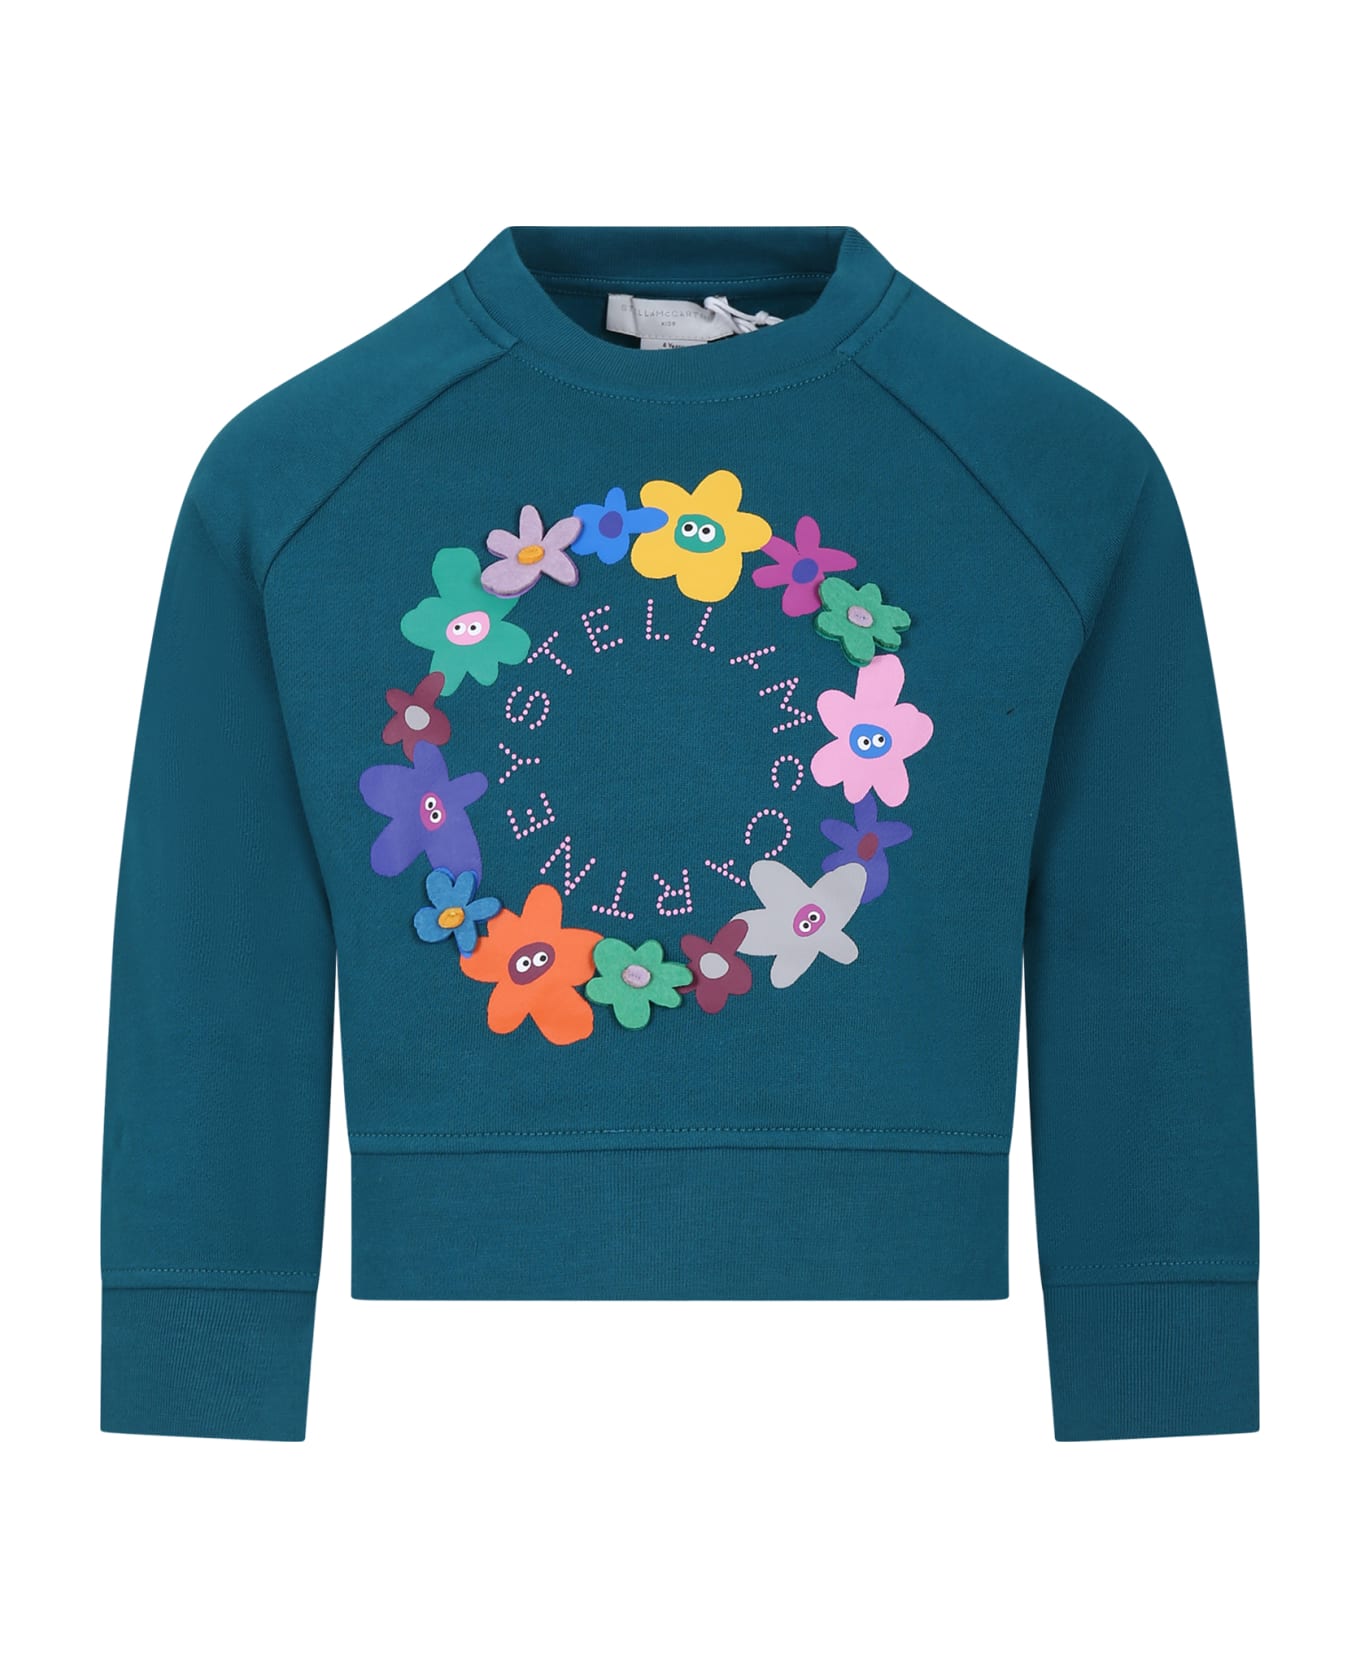 Stella McCartney Kids Green Sweatshirt For Girl With Flowers And Logo - Green